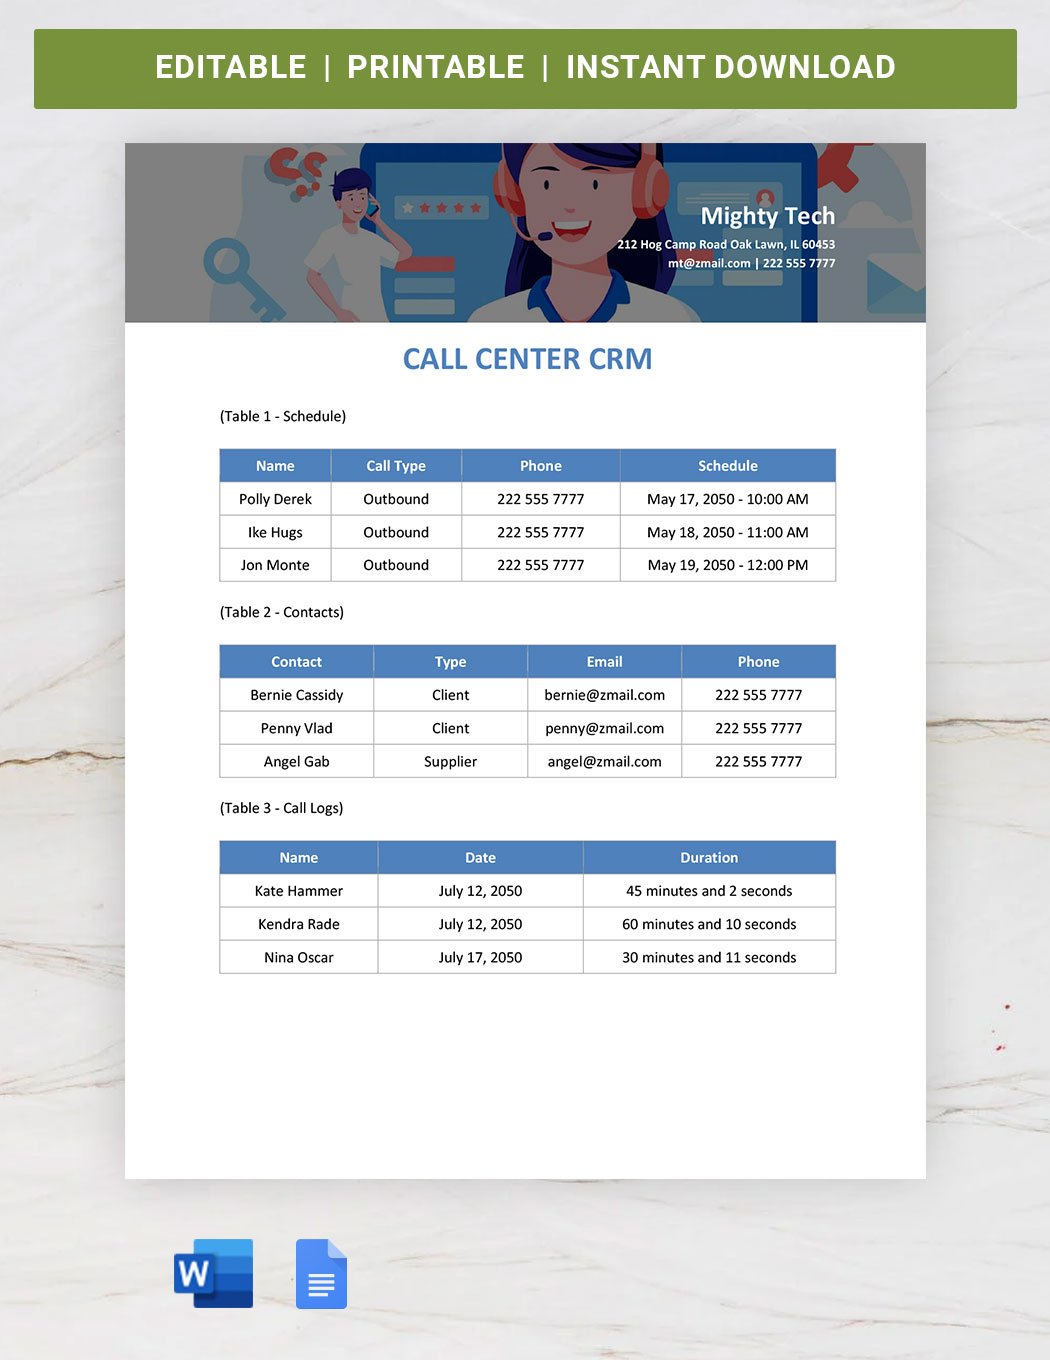 Call Center CRM Template